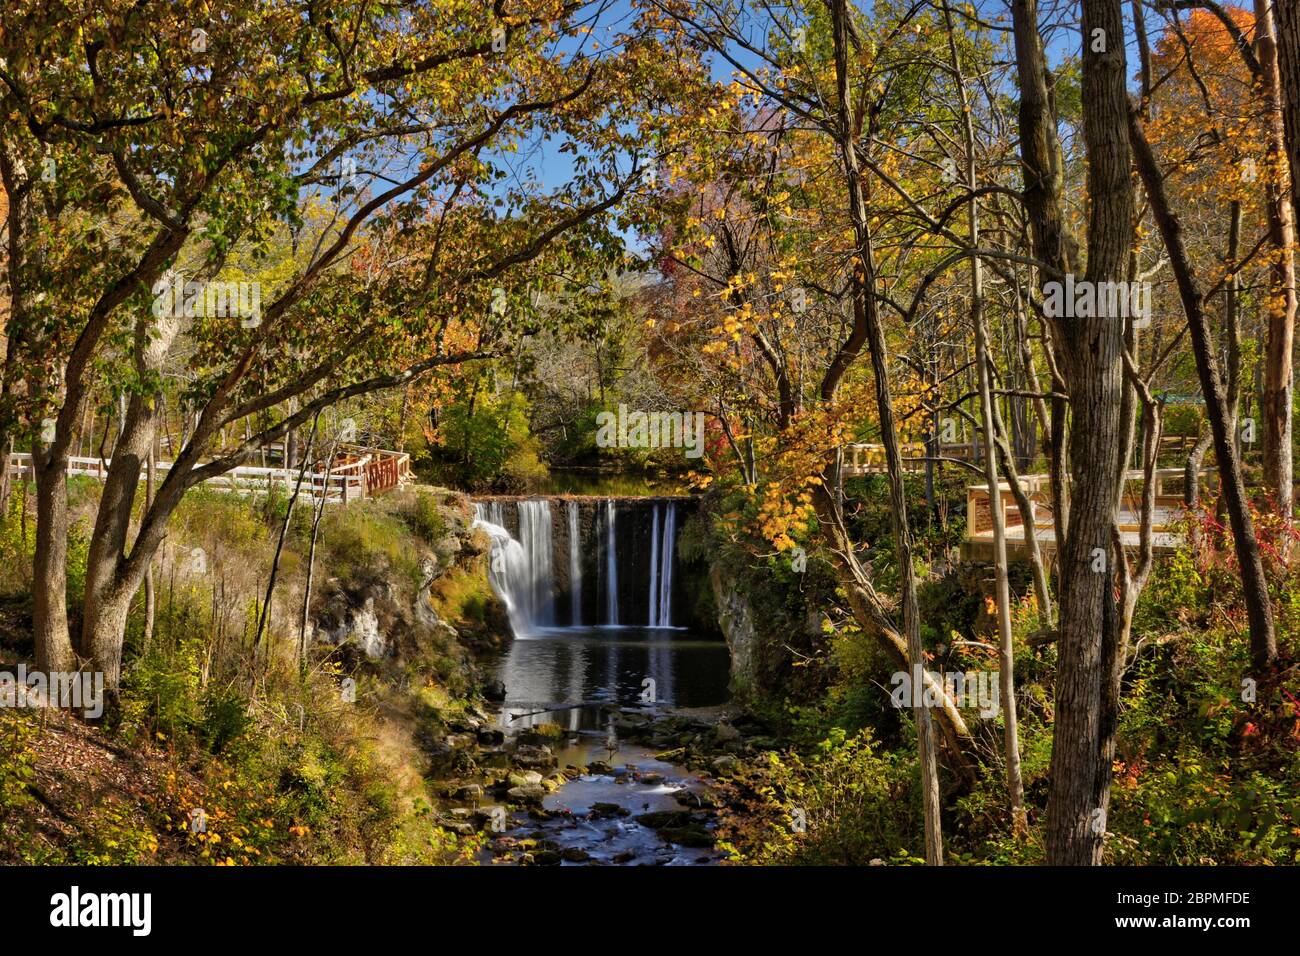 Cedar Cliff Falls on Massie Creek. Autumn. Peterson Park, Indian Mound Reserve, Cedarville, Ohio, USA. High Dynamic Range (HDR) photo processing. Stock Photo